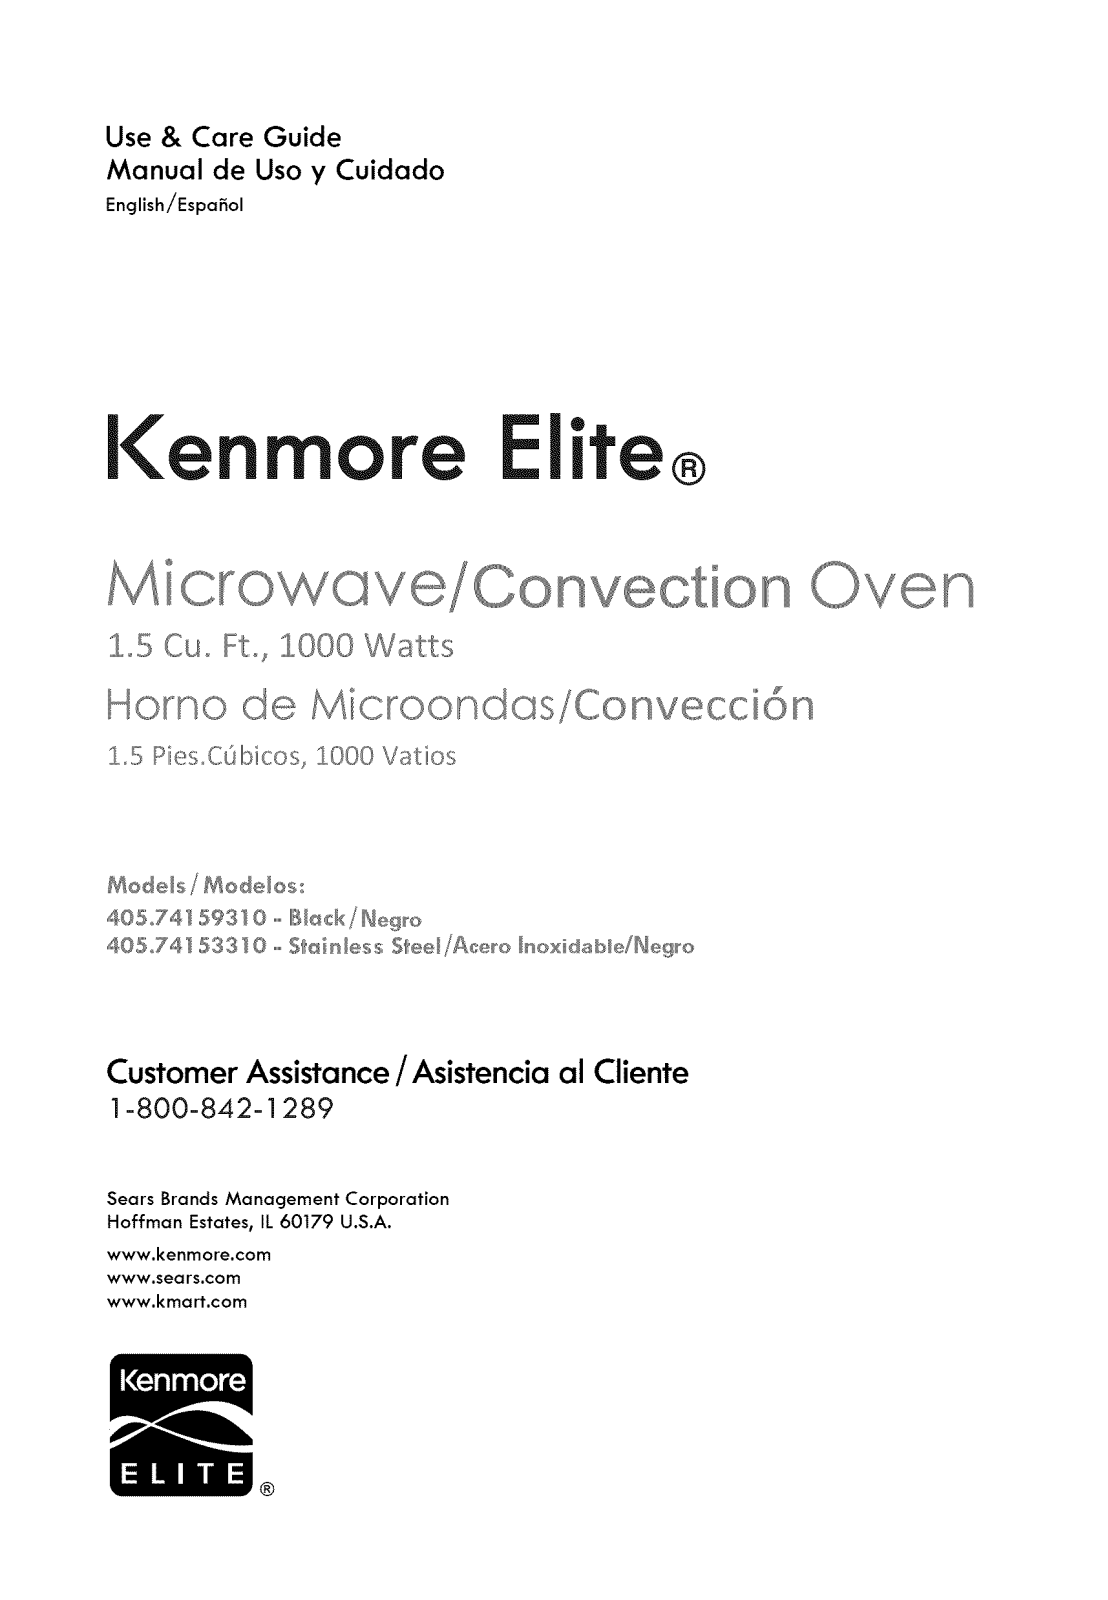 Kenmore Elite 40574153310, 40574159310, 40575153310 Owner’s Manual